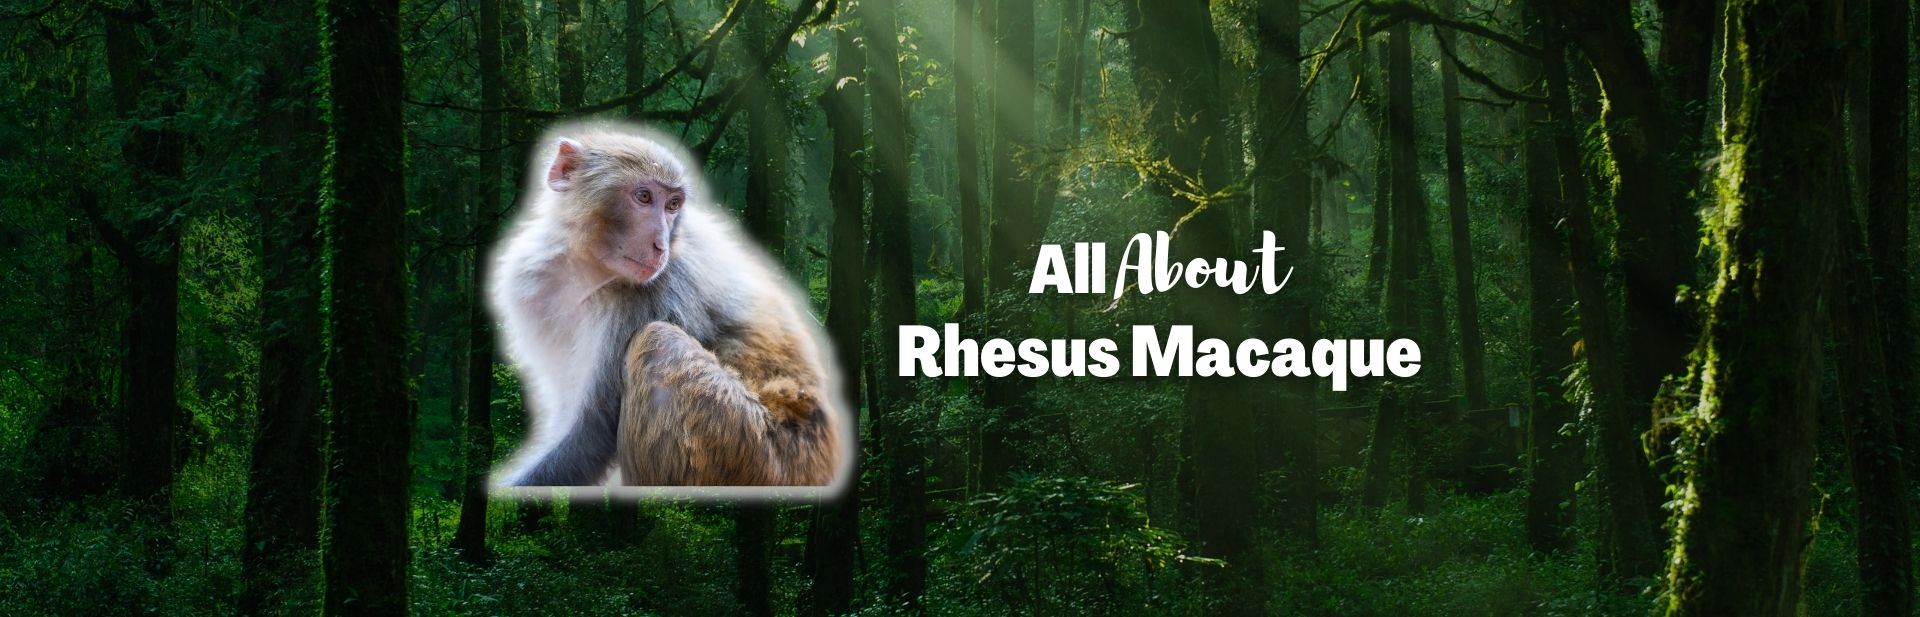 Rhesus Macaque: The Adaptable Primate Thriving in Asia’s Diverse Habitats